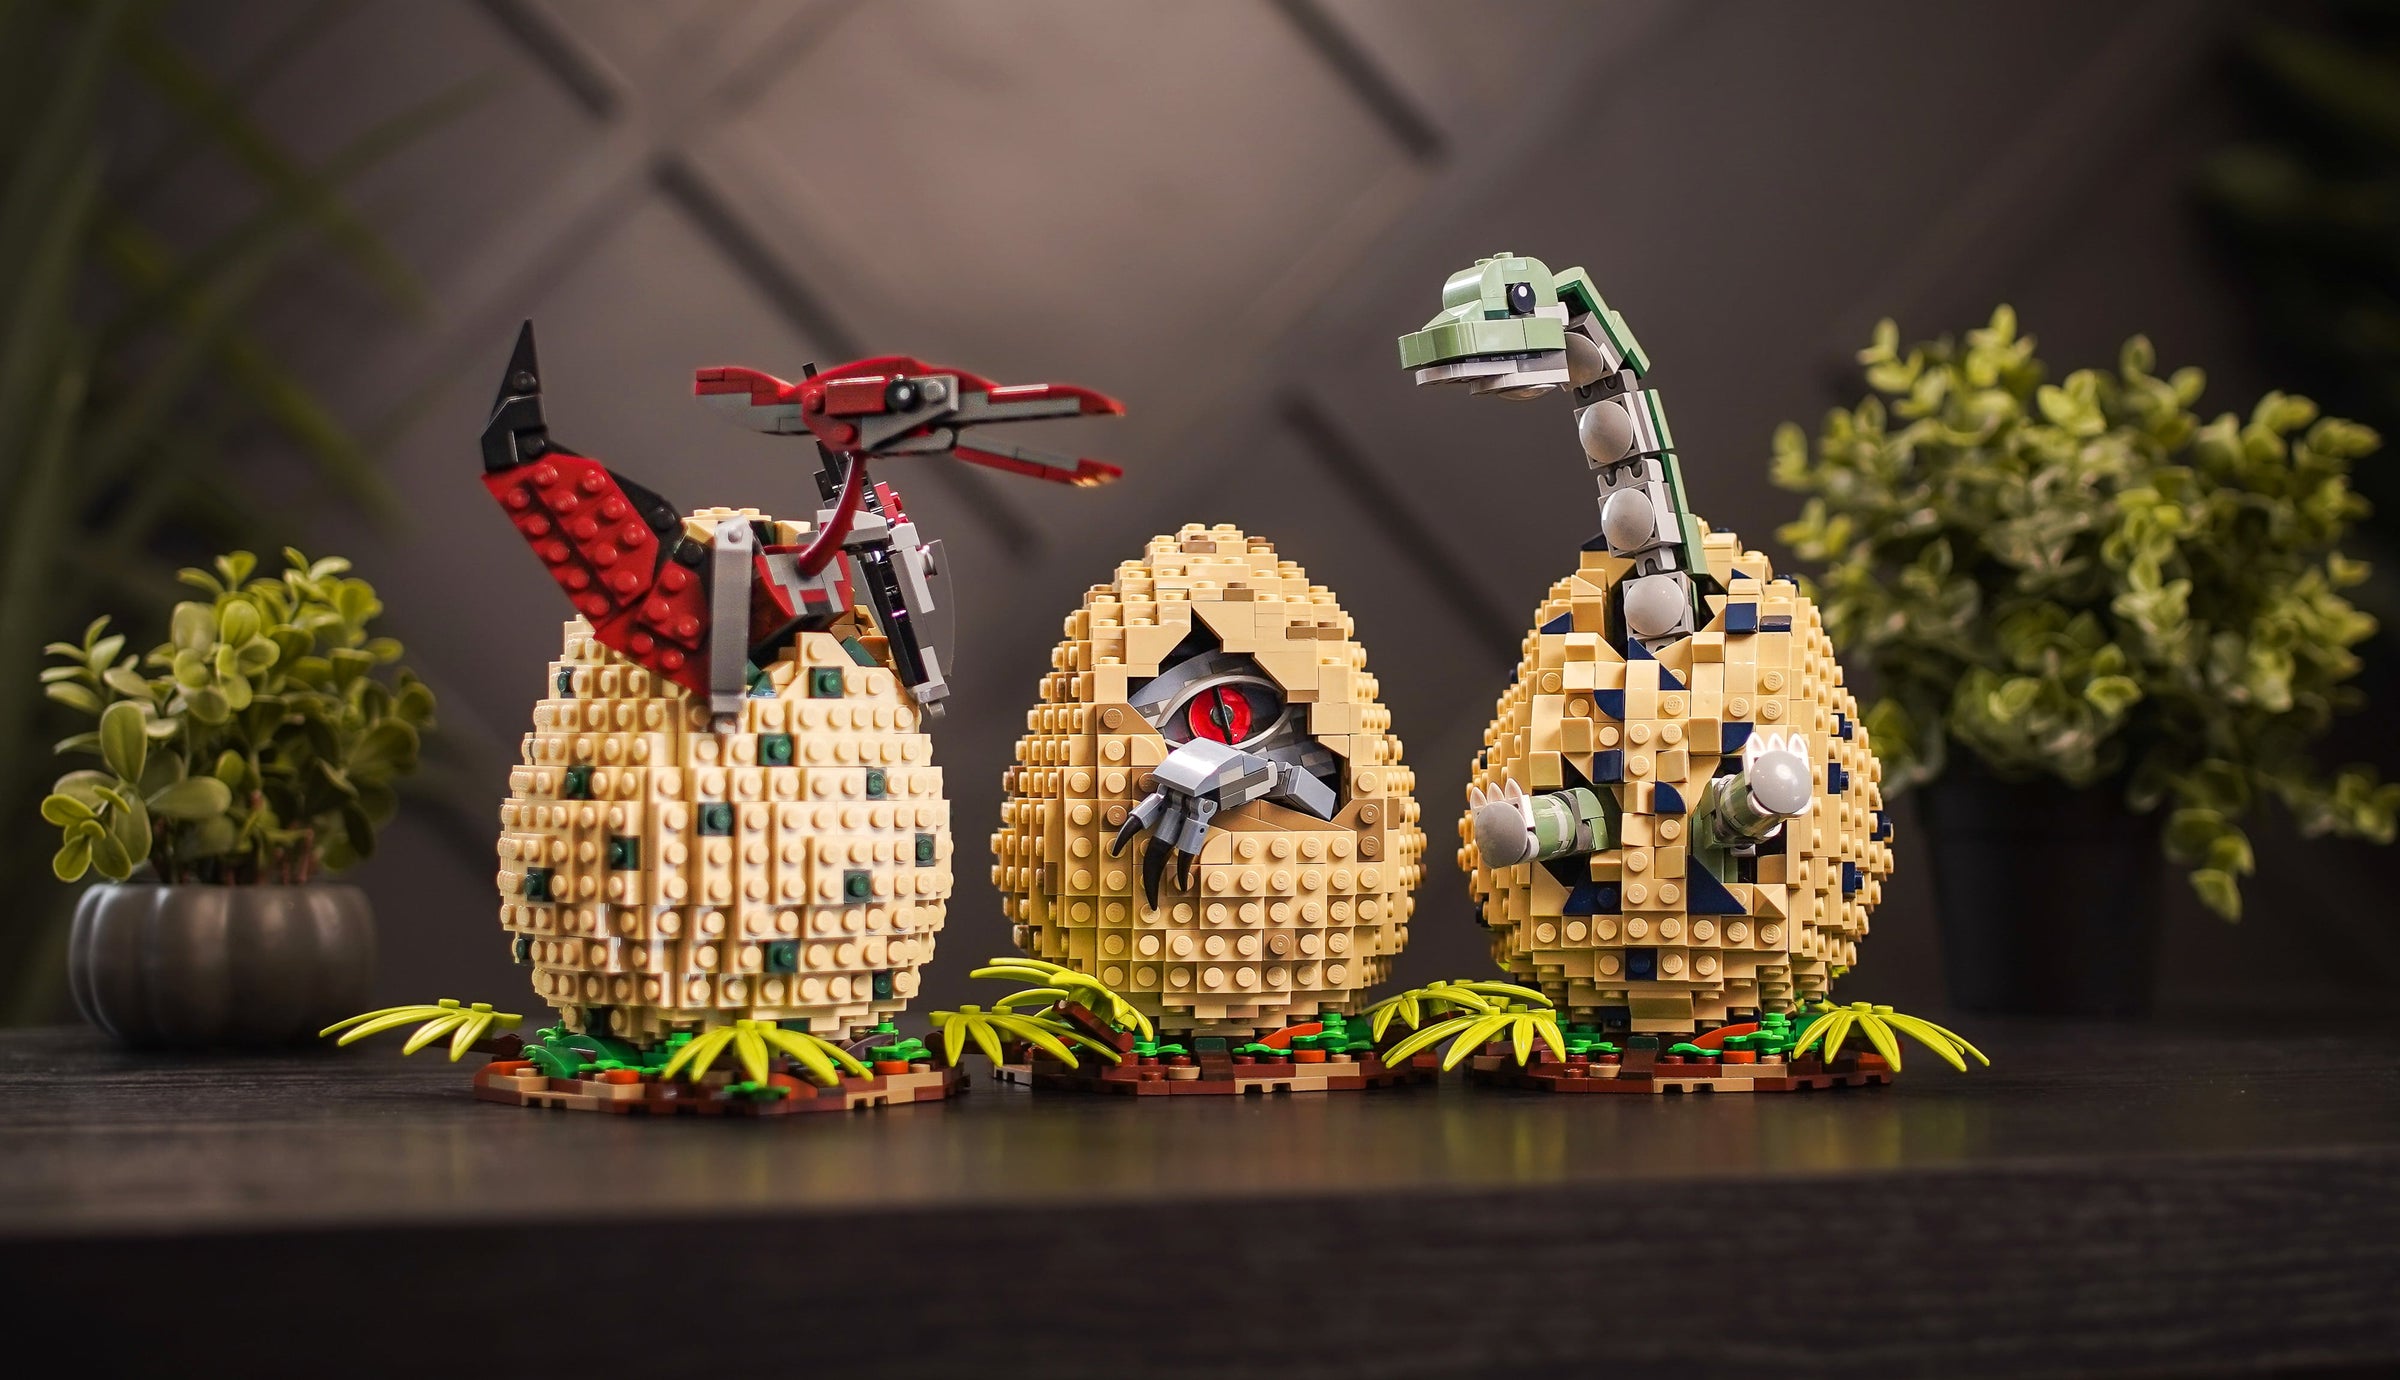 Dino Eggs Life-Sized Jurassic Replicas in LEGO Bricks Lifestyle Photography